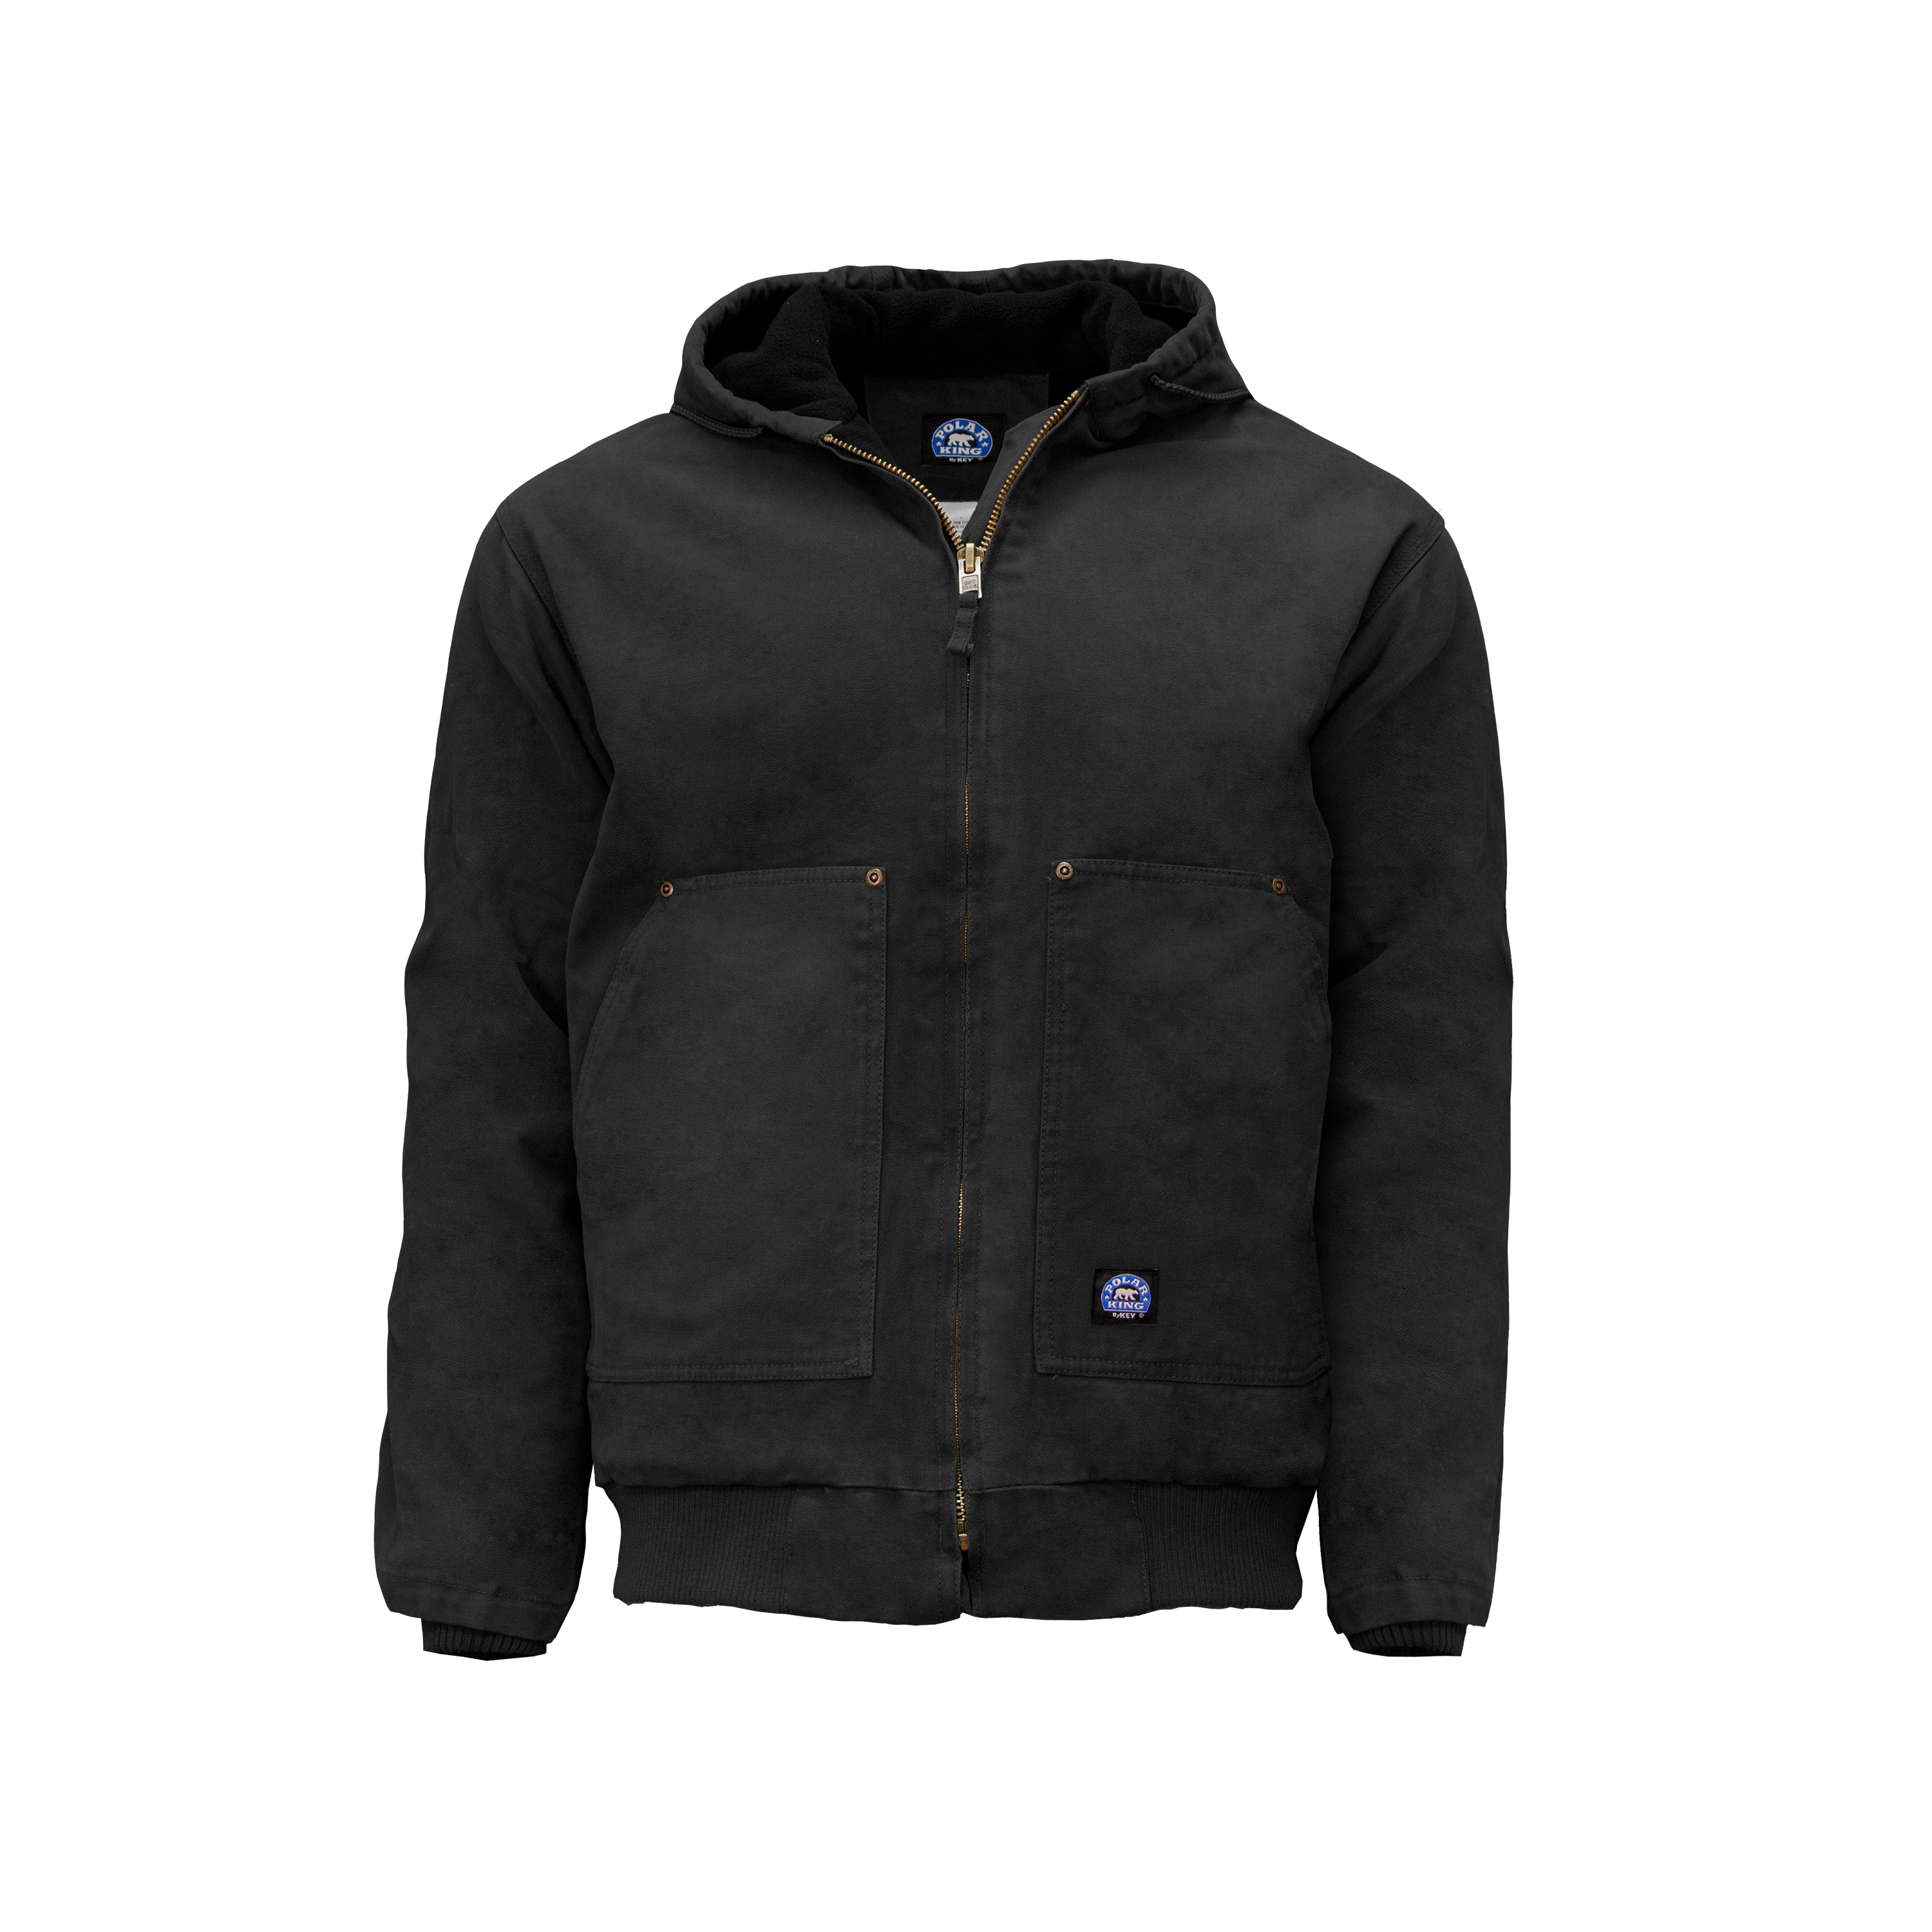 Men's Premium Insulated Fleece Lined Jacket - KEY Apparel